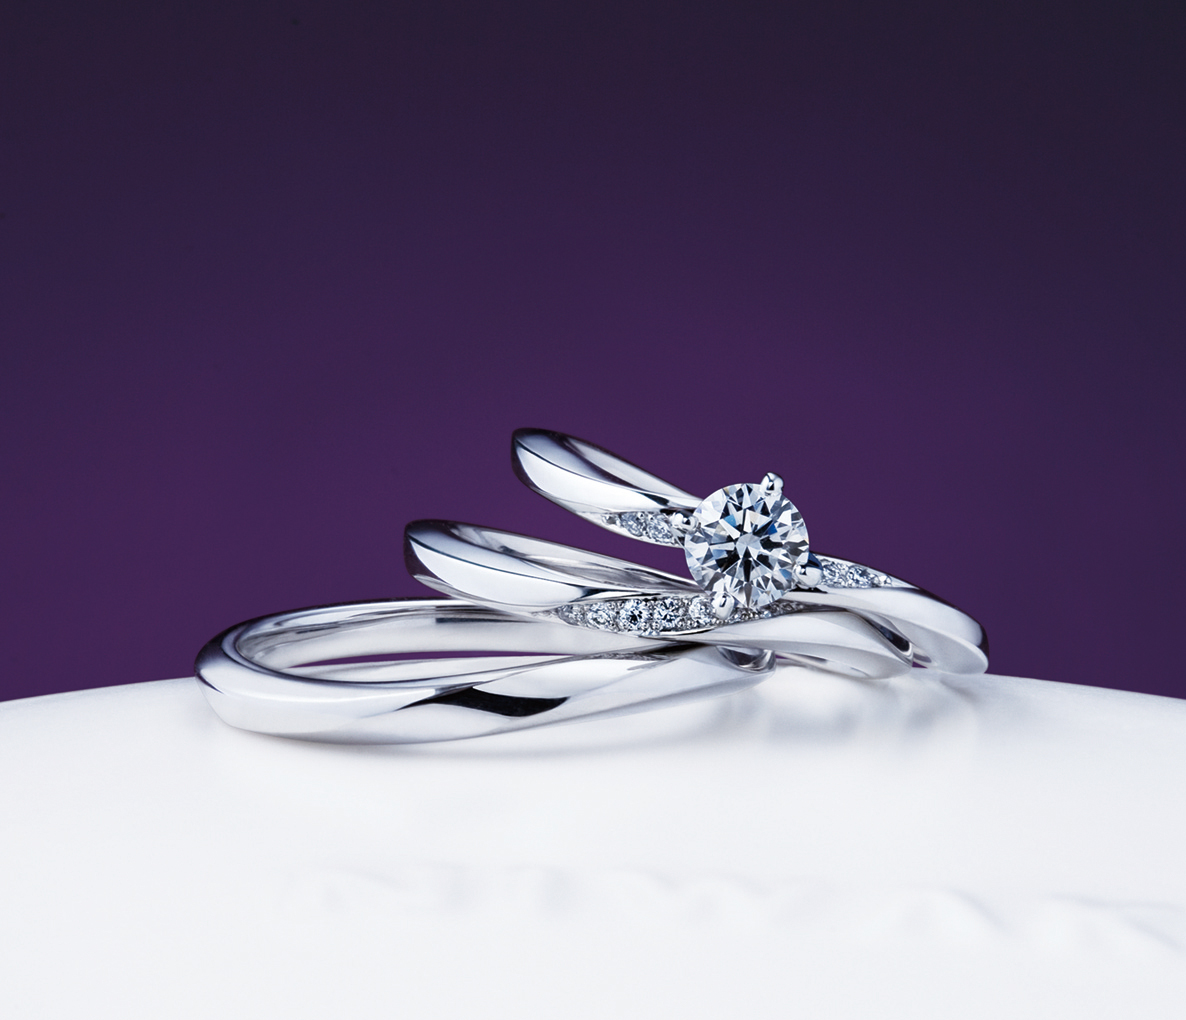 NIWAKAのセットリング婚約指輪「露華」結婚指輪「朝葉」